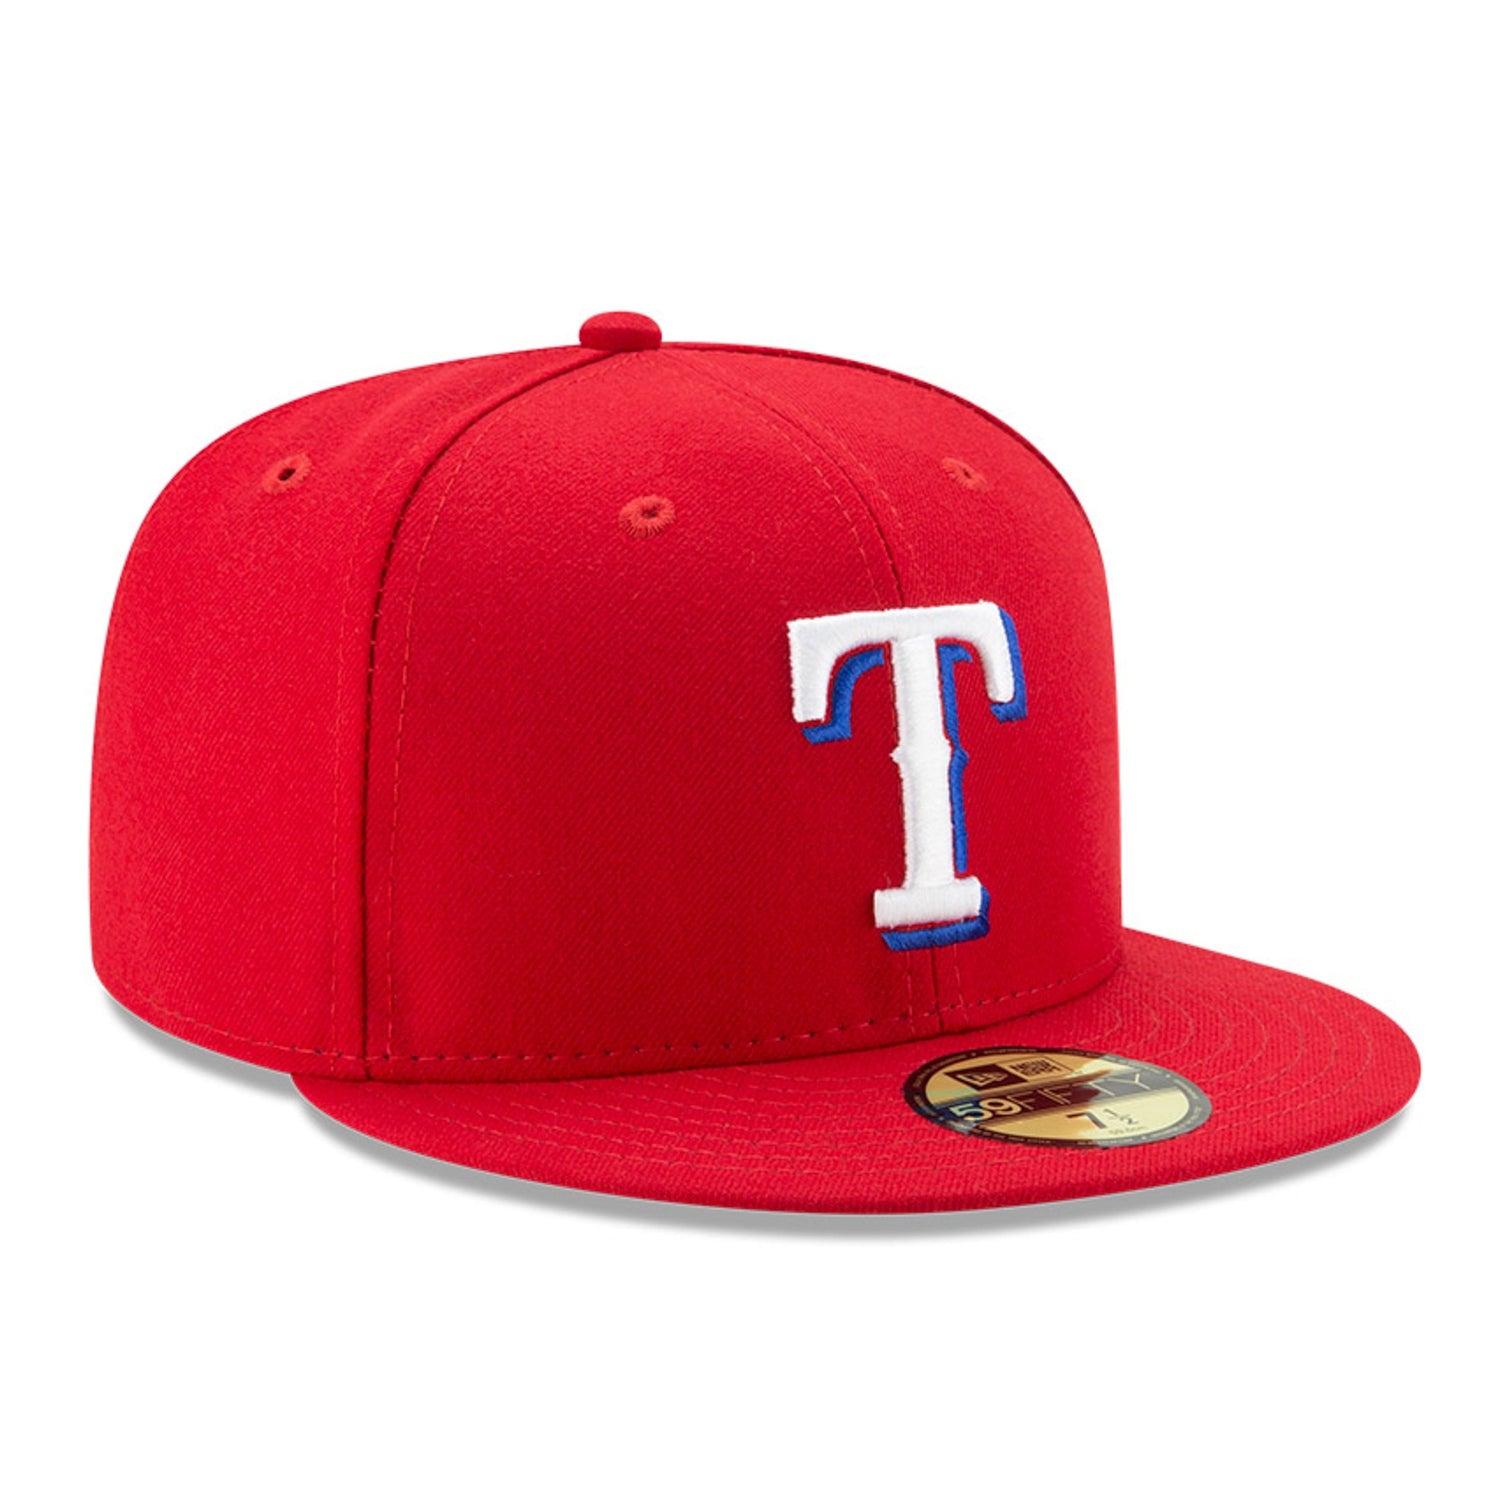 new era texas rangers hat